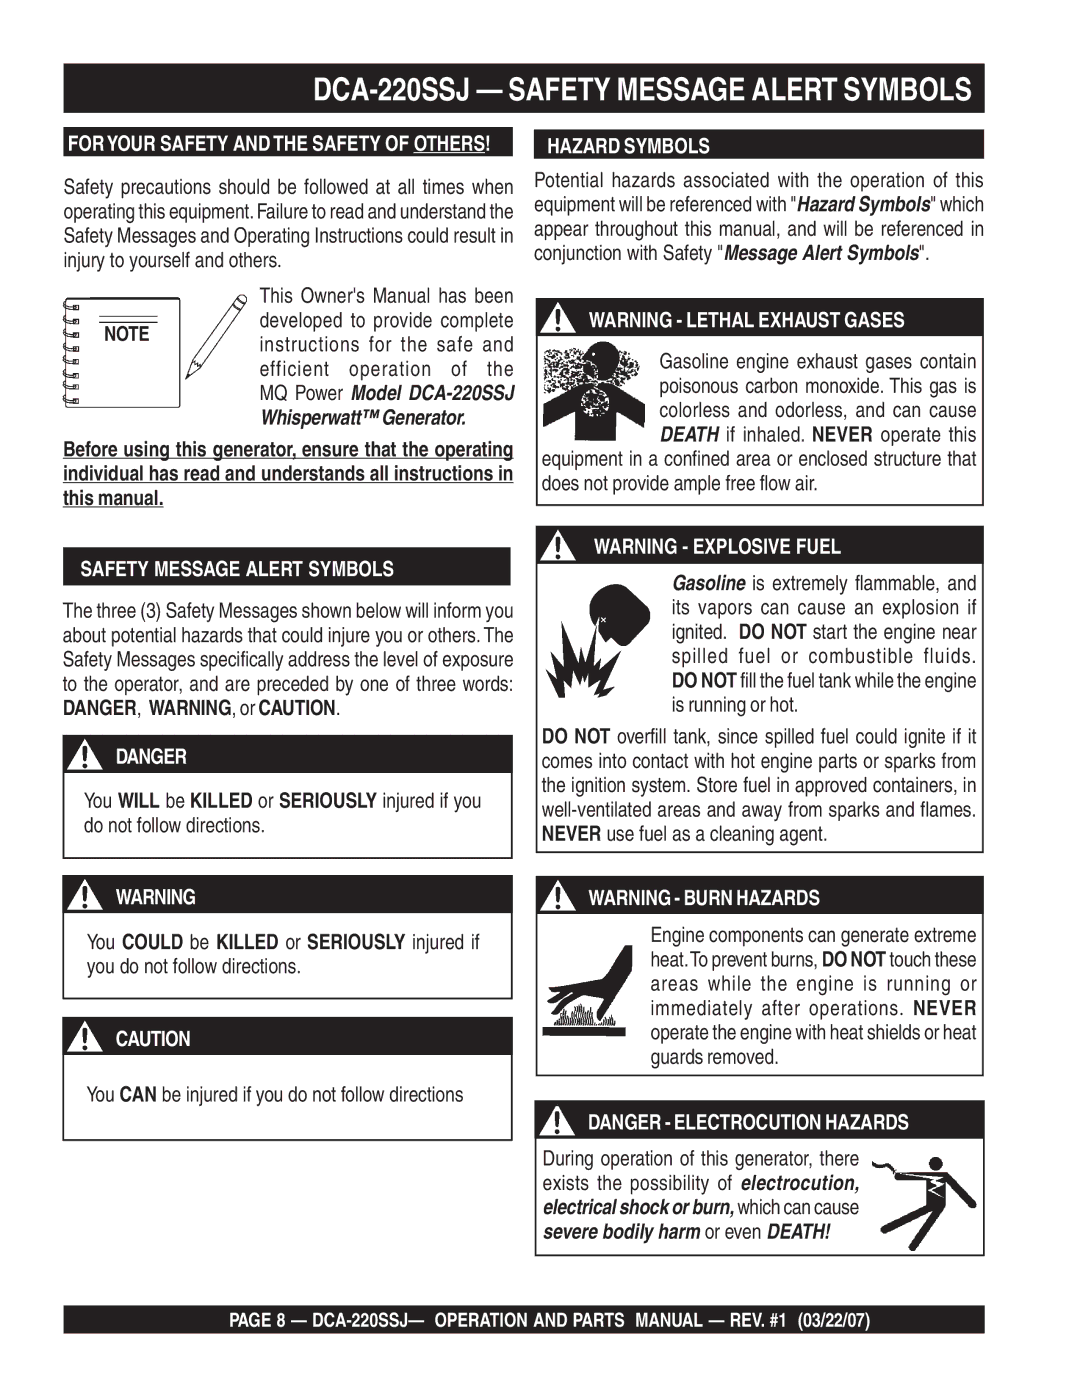 Multiquip operation manual DCA-220SSJ Safety Message Alert Symbols, Hazard Symbols 